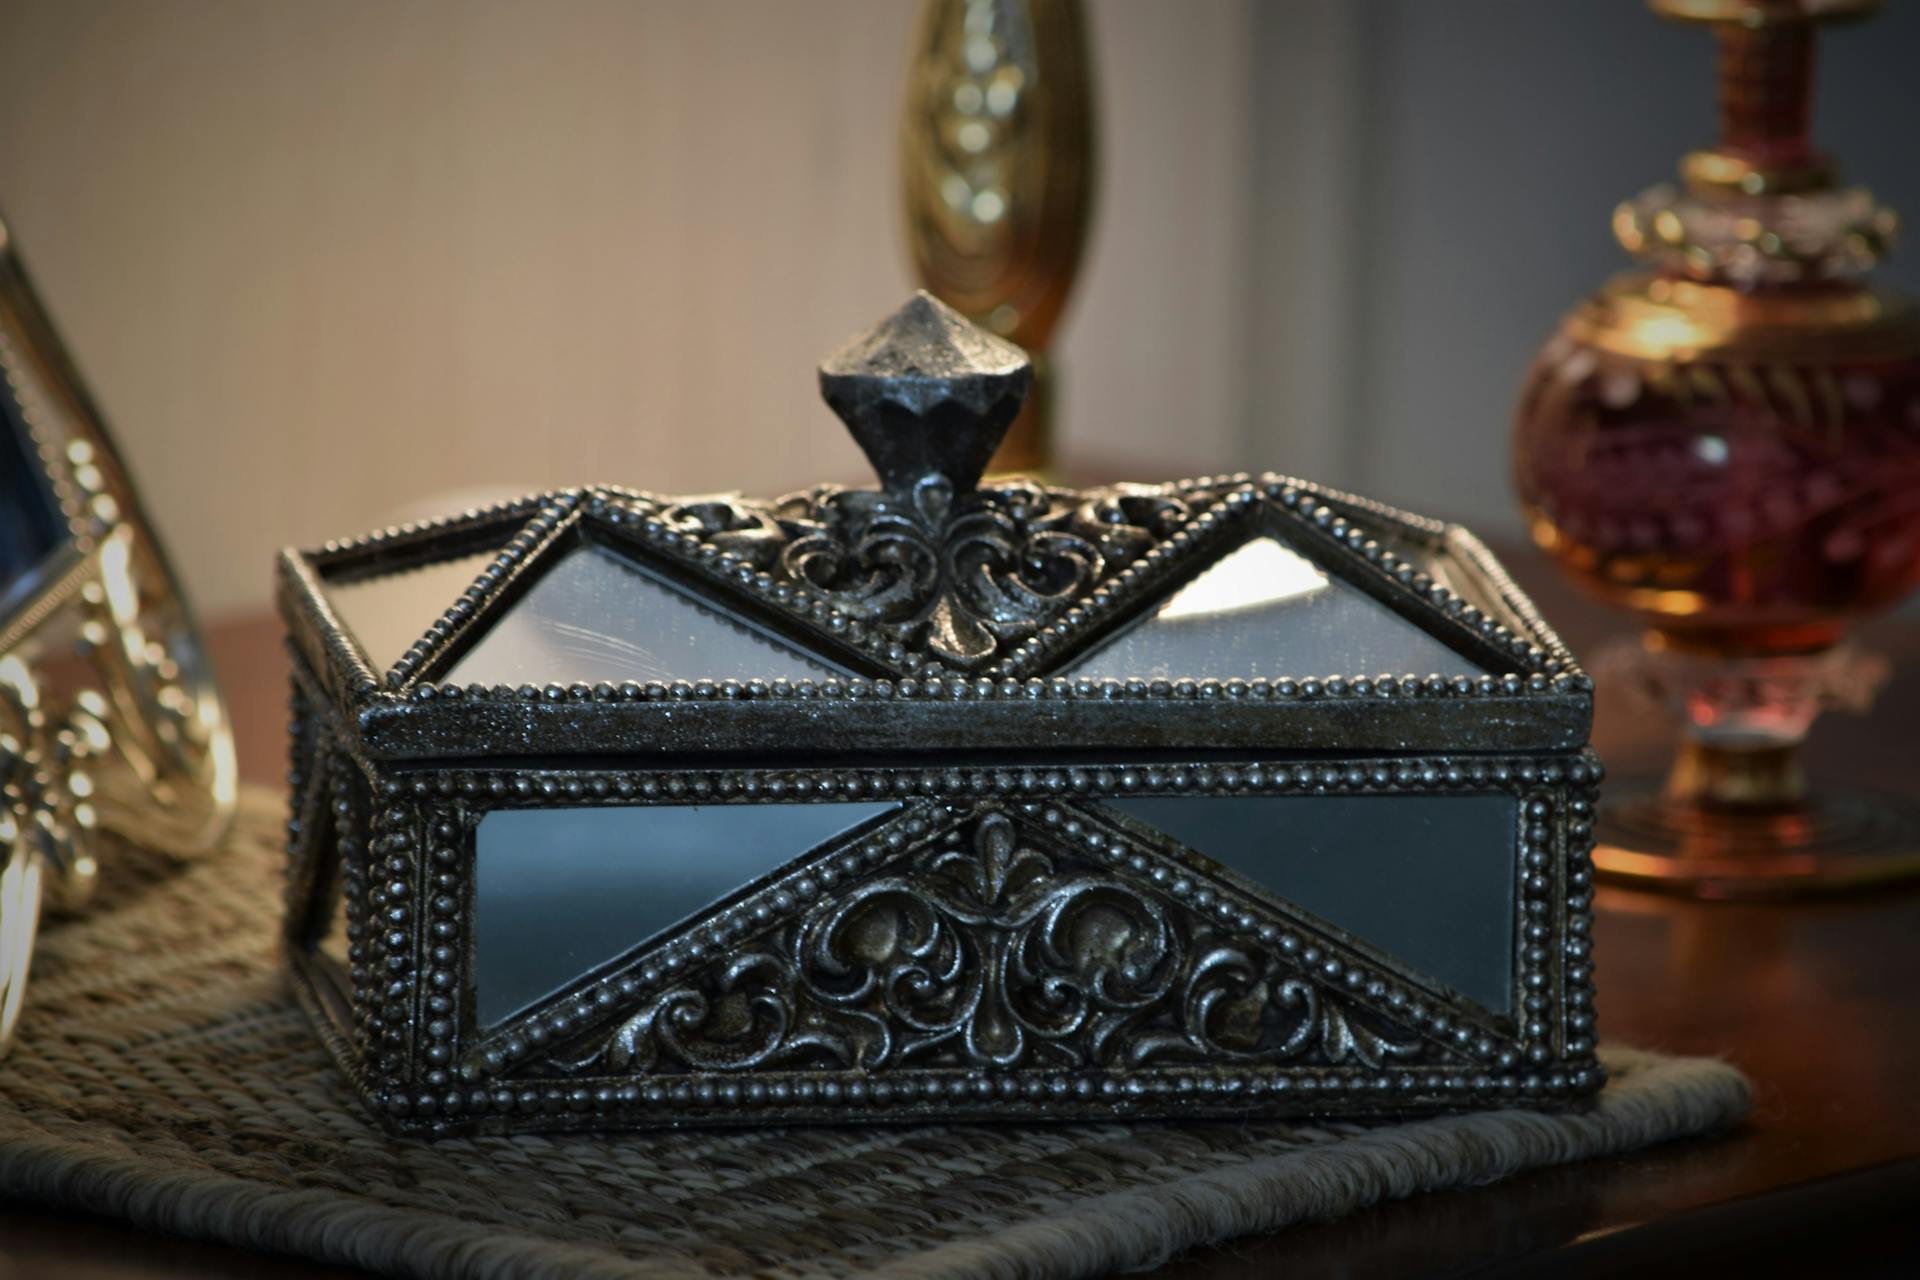 A black jewelry box | Source: Pexels